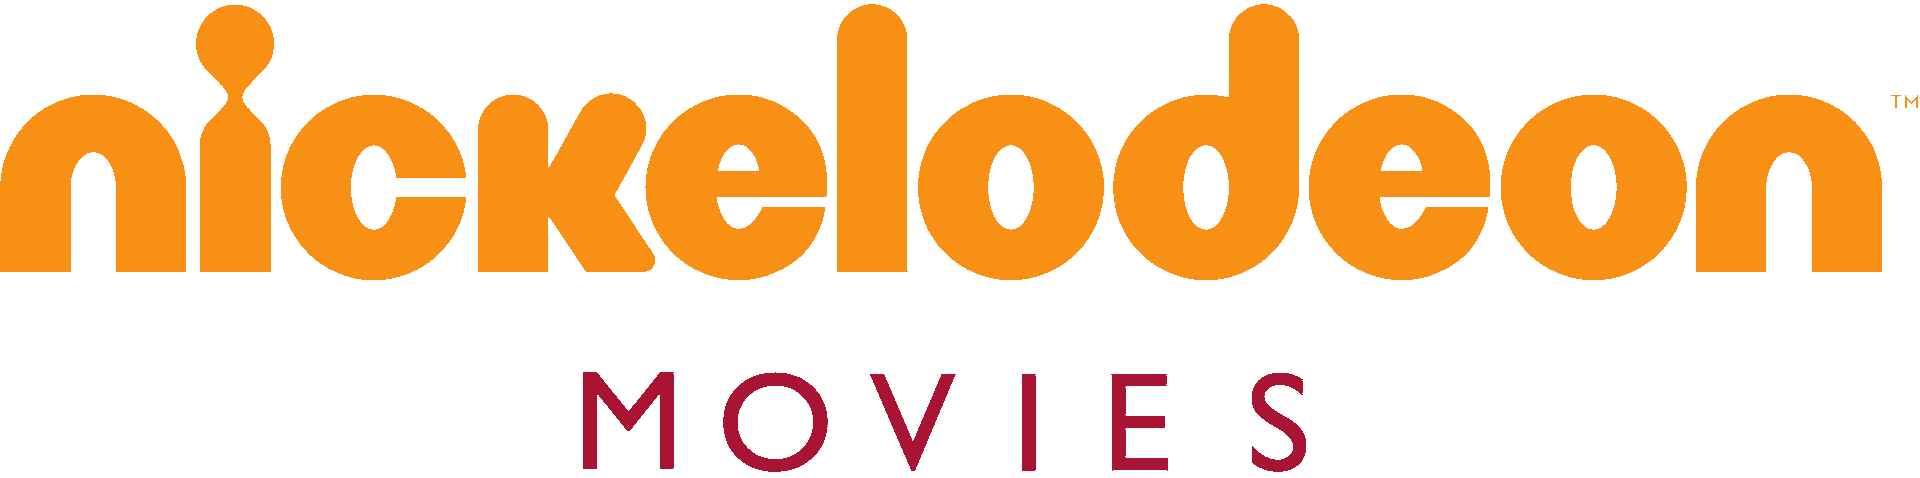 Nickelodeon Movies Logo - Nickelodeon Movies | Rugrats Wiki | FANDOM powered by Wikia